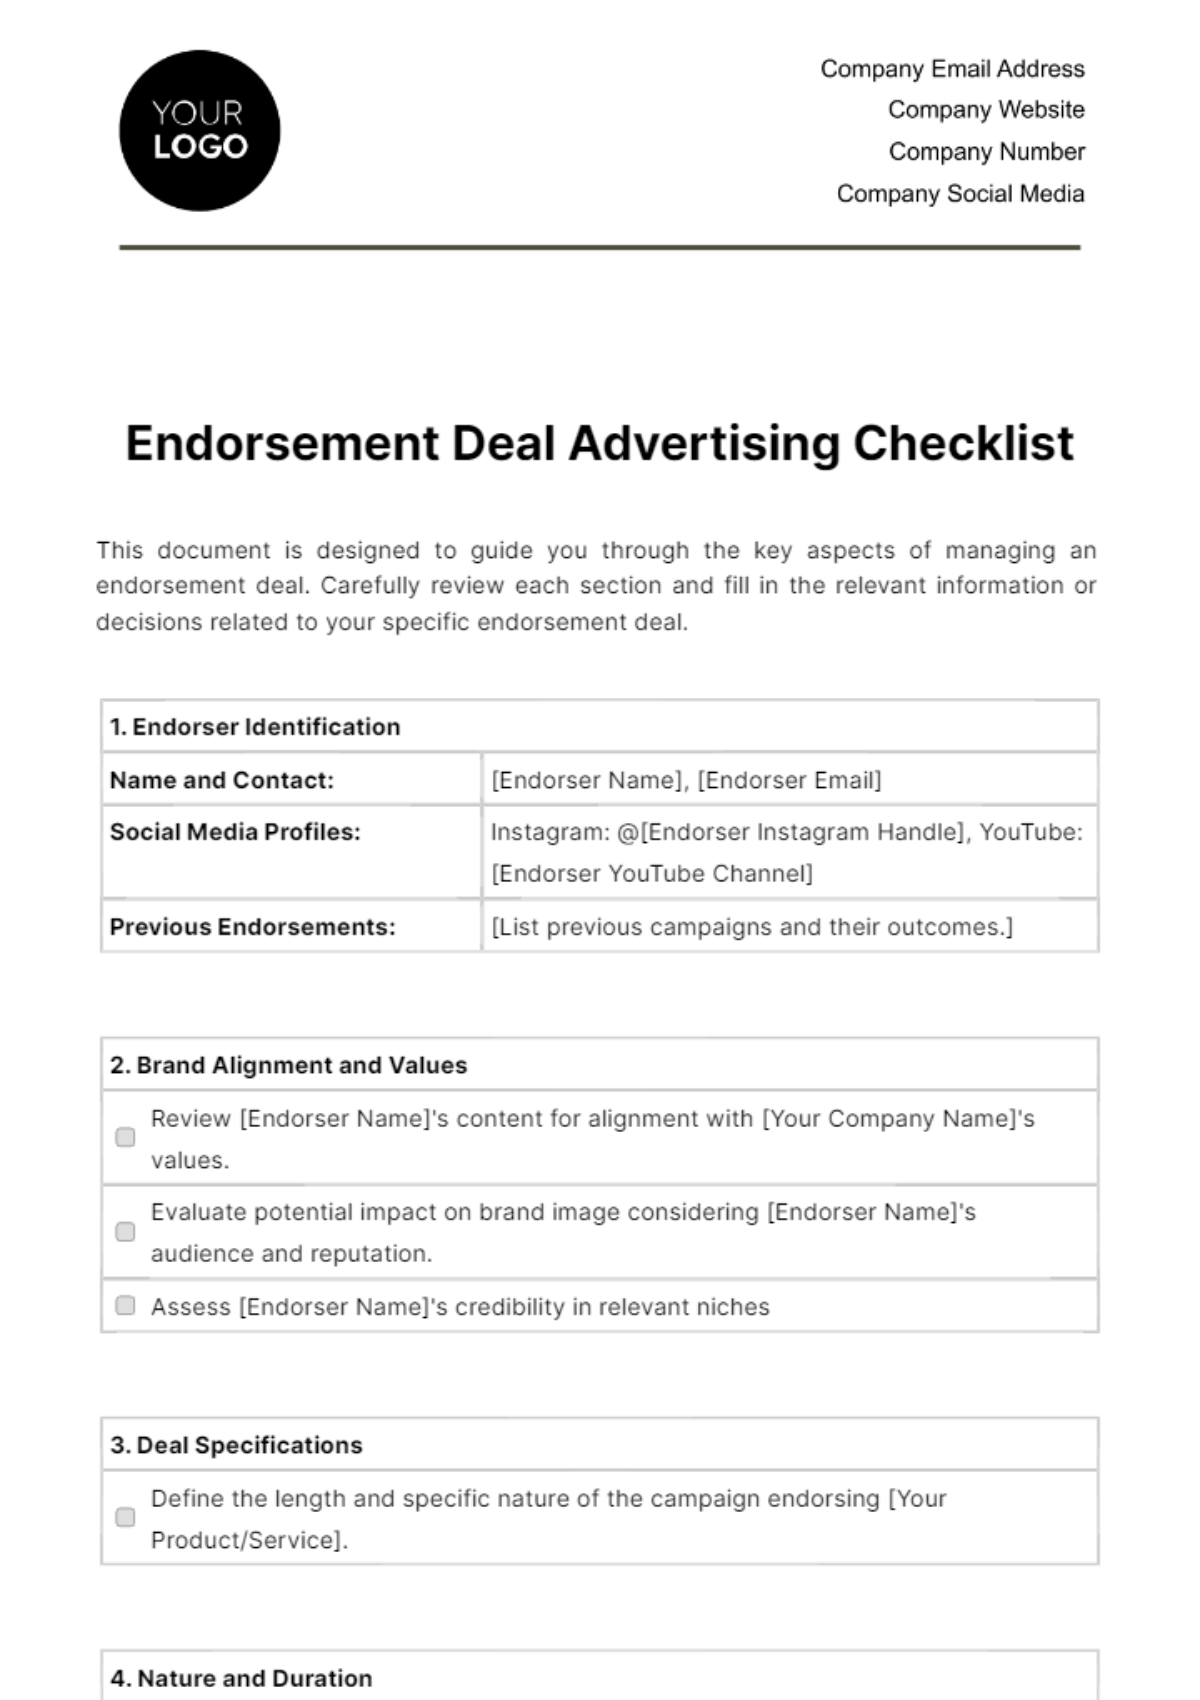 Free Endorsement Deal Advertising Checklist Template